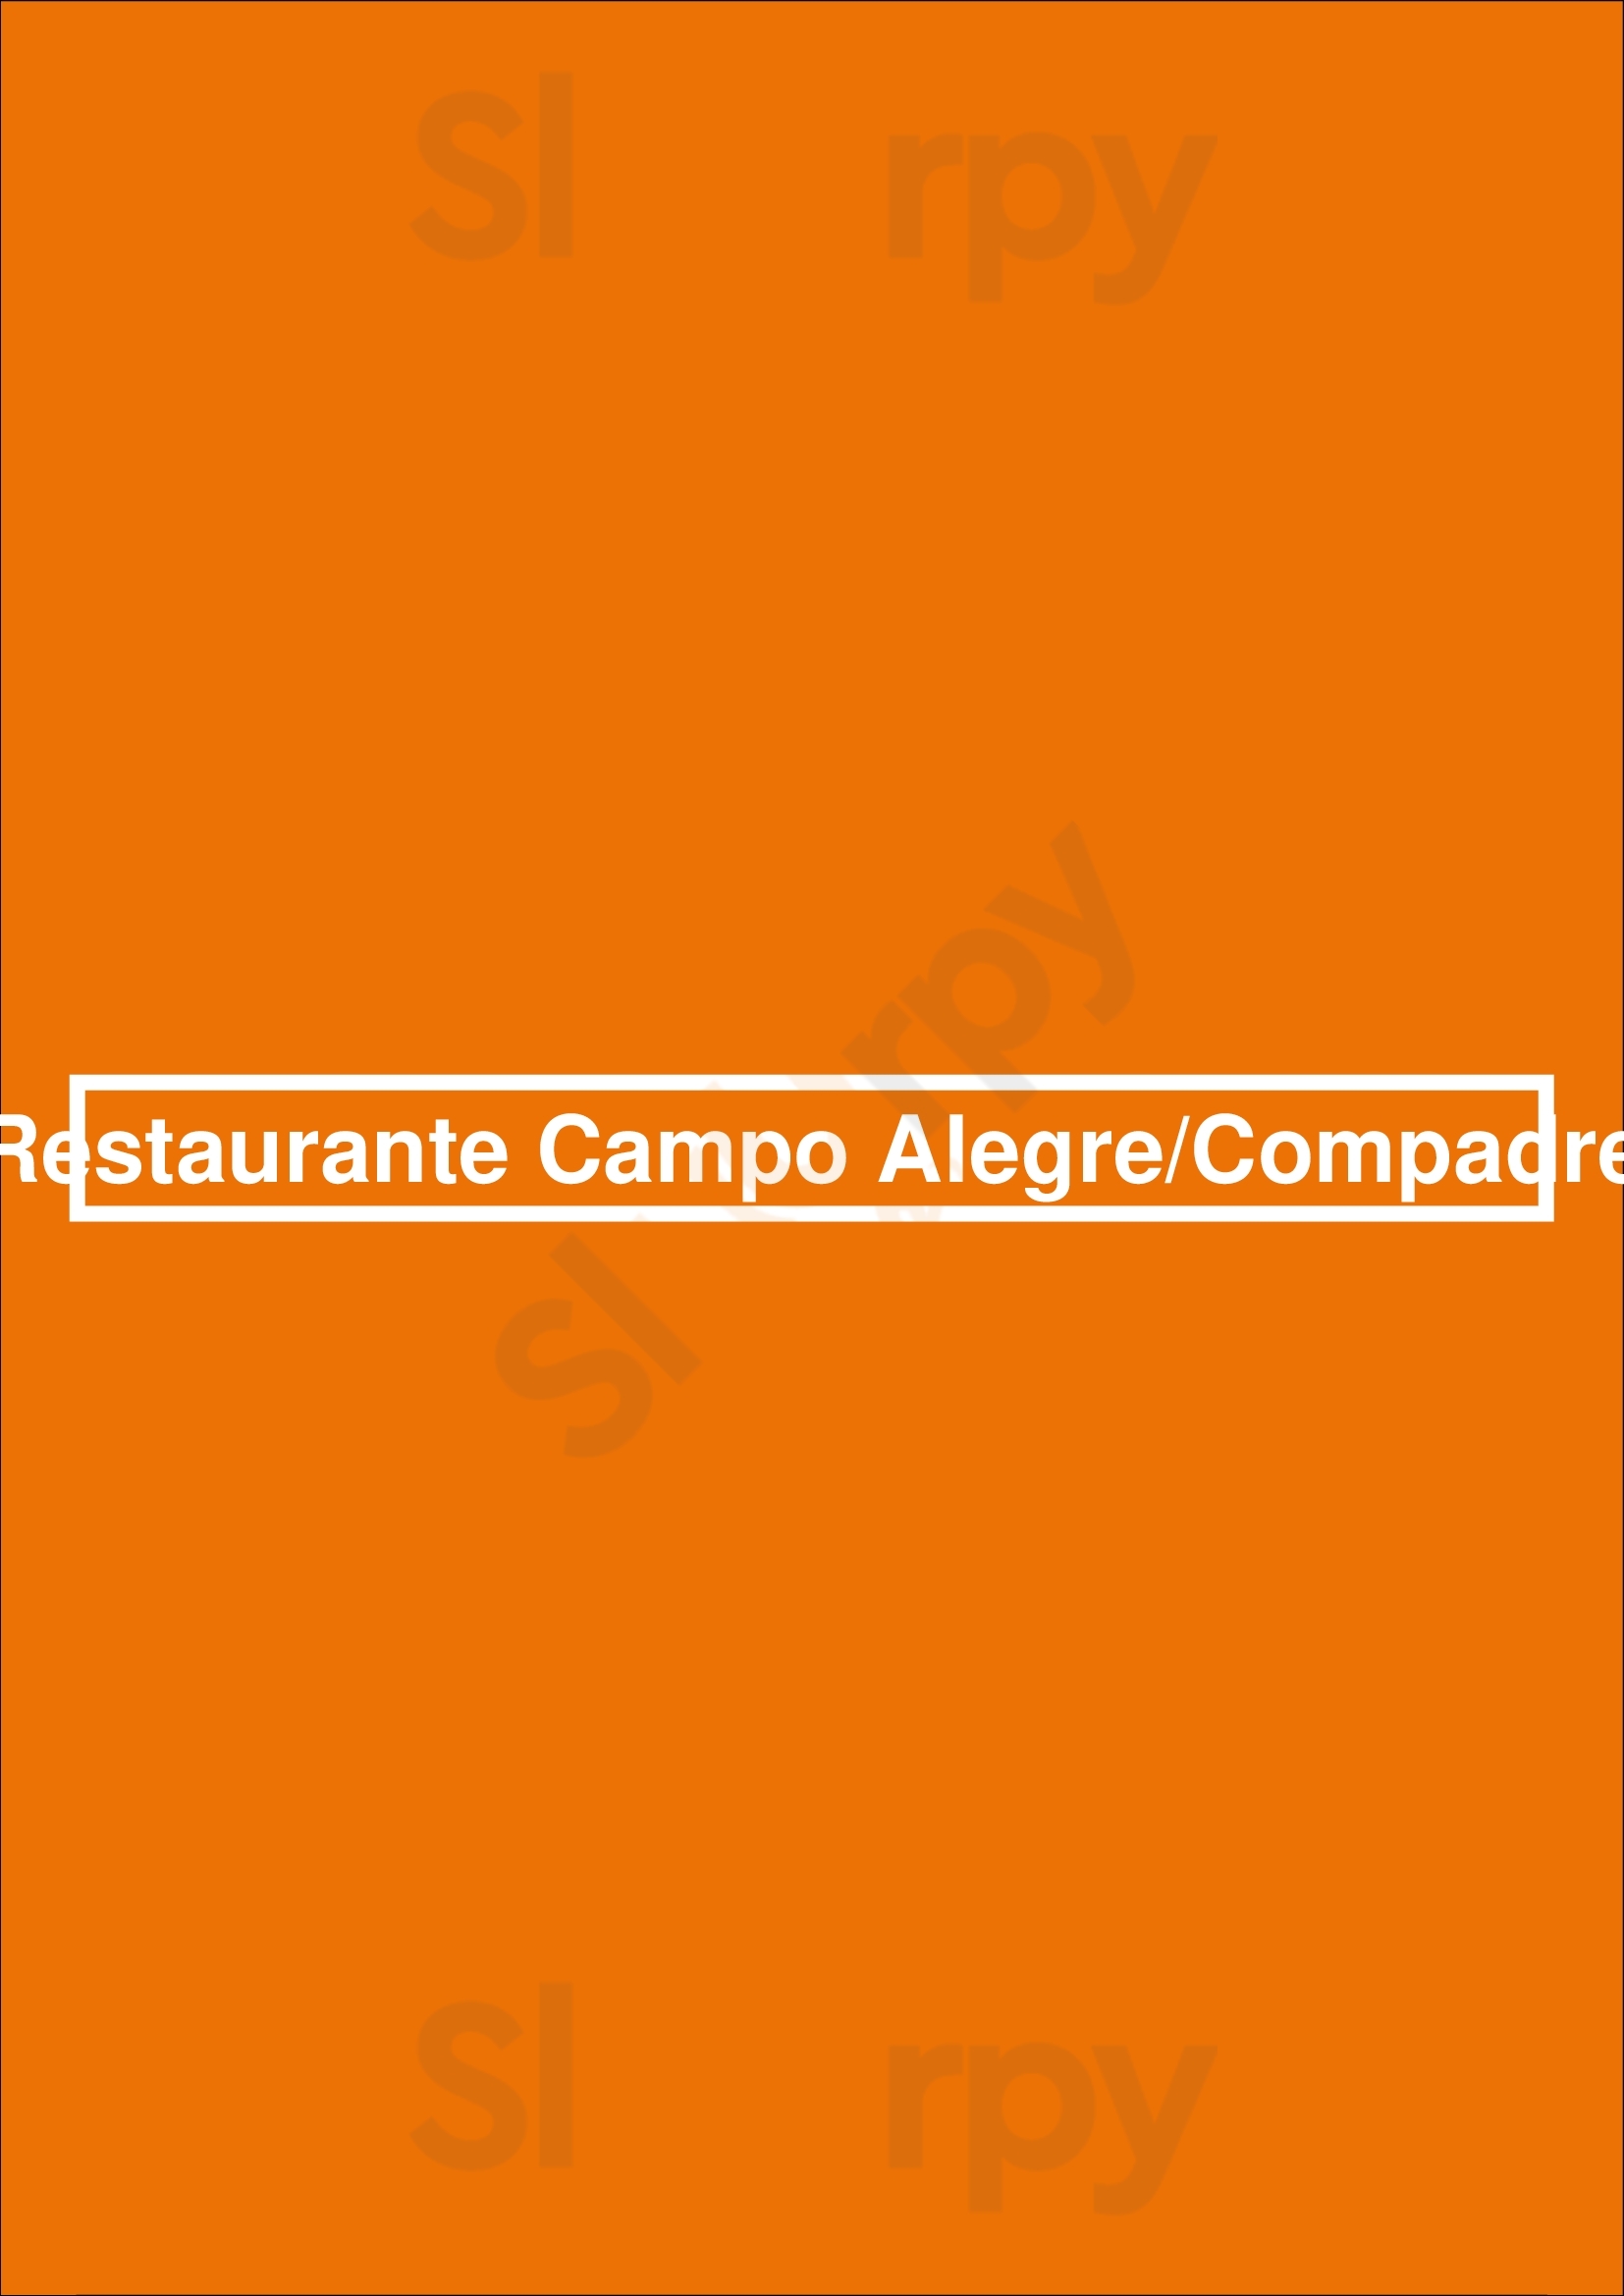 Restaurante Campo Alegre/compadre Porto Menu - 1